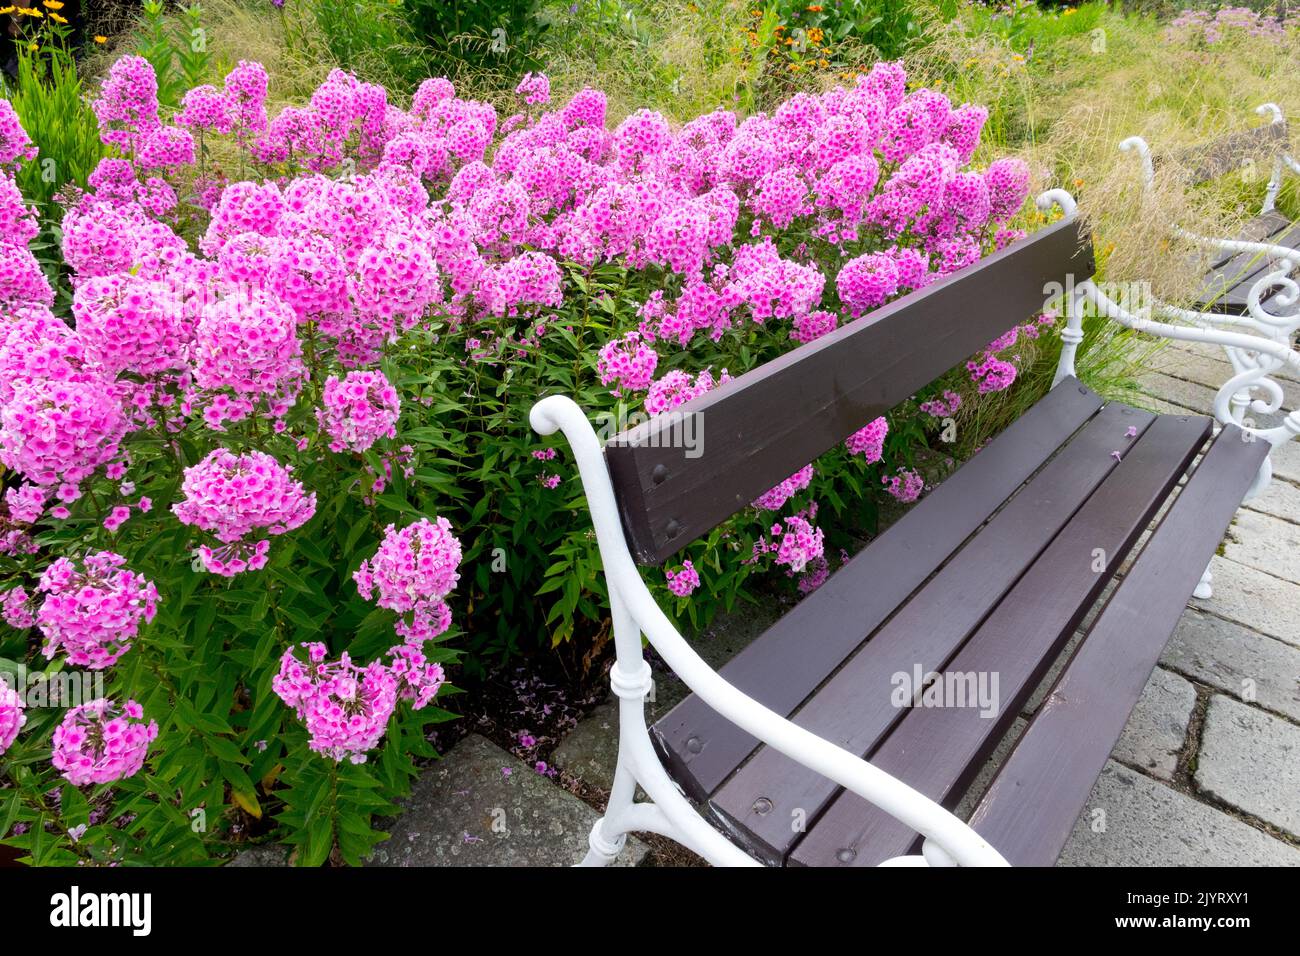 Phlox de jardin rose, Phlox paniculata 'miss Pepper', banc de jardin en métal, phlox rose, lieu de repos Banque D'Images